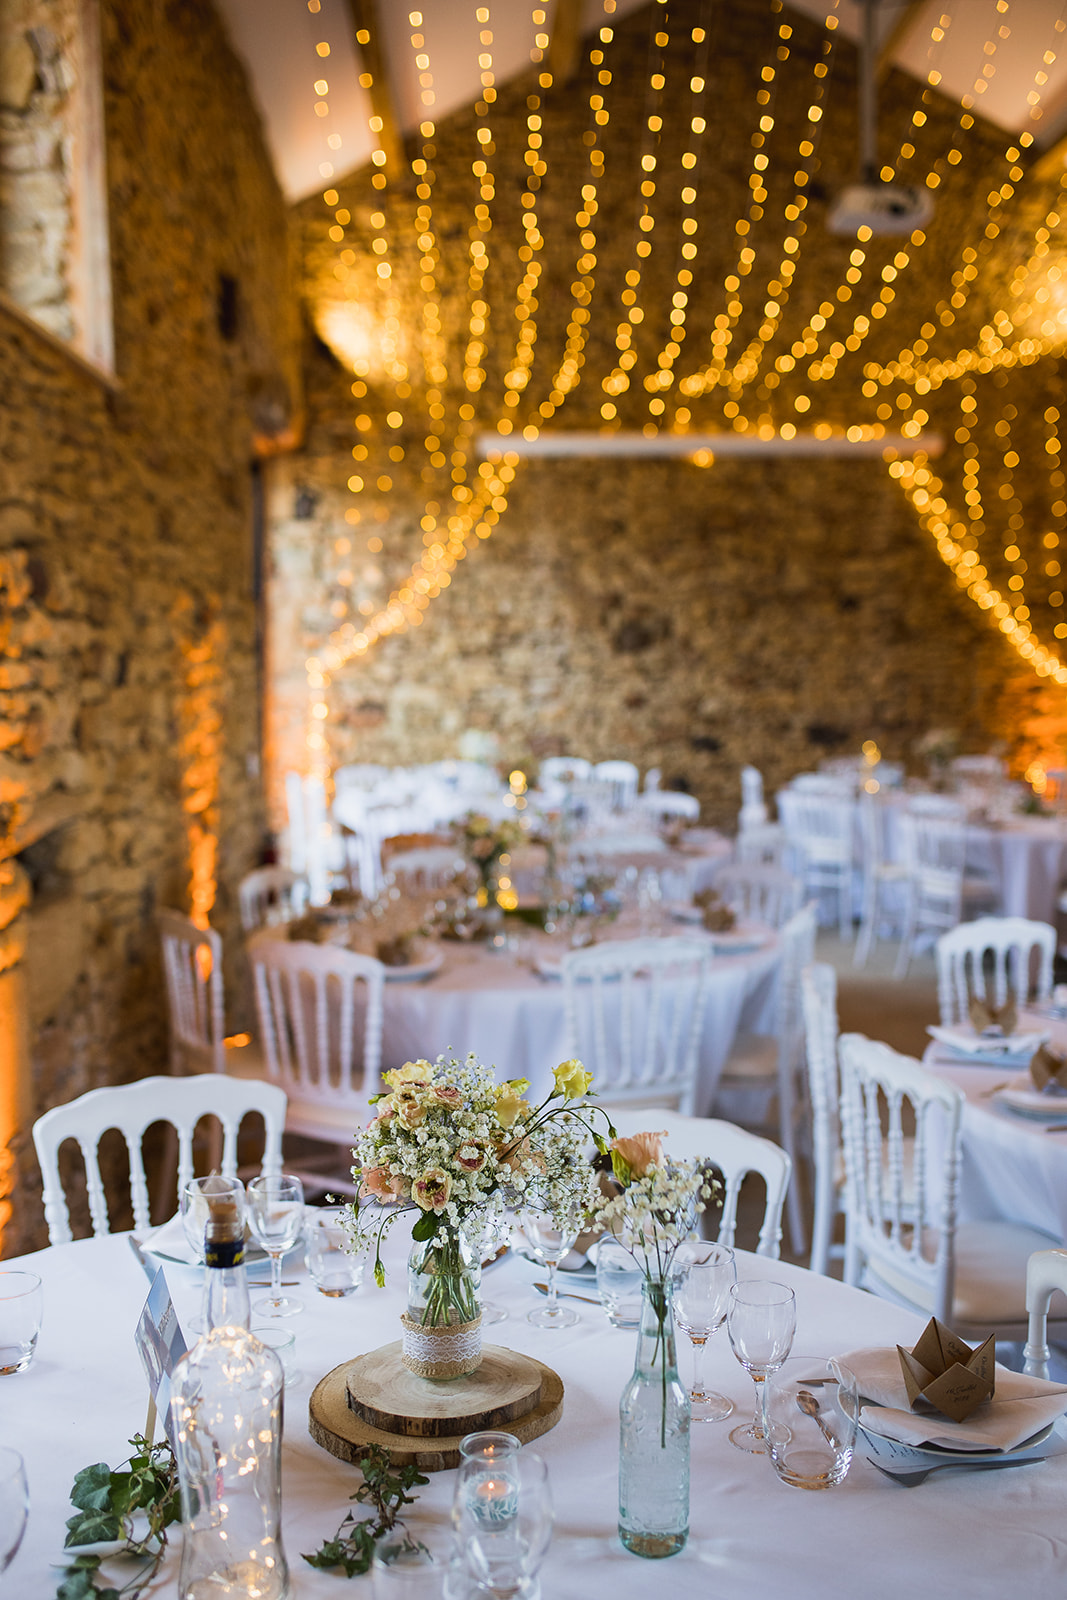 Photographe de mariage en Dordogne. English speaking wedding photographer.
